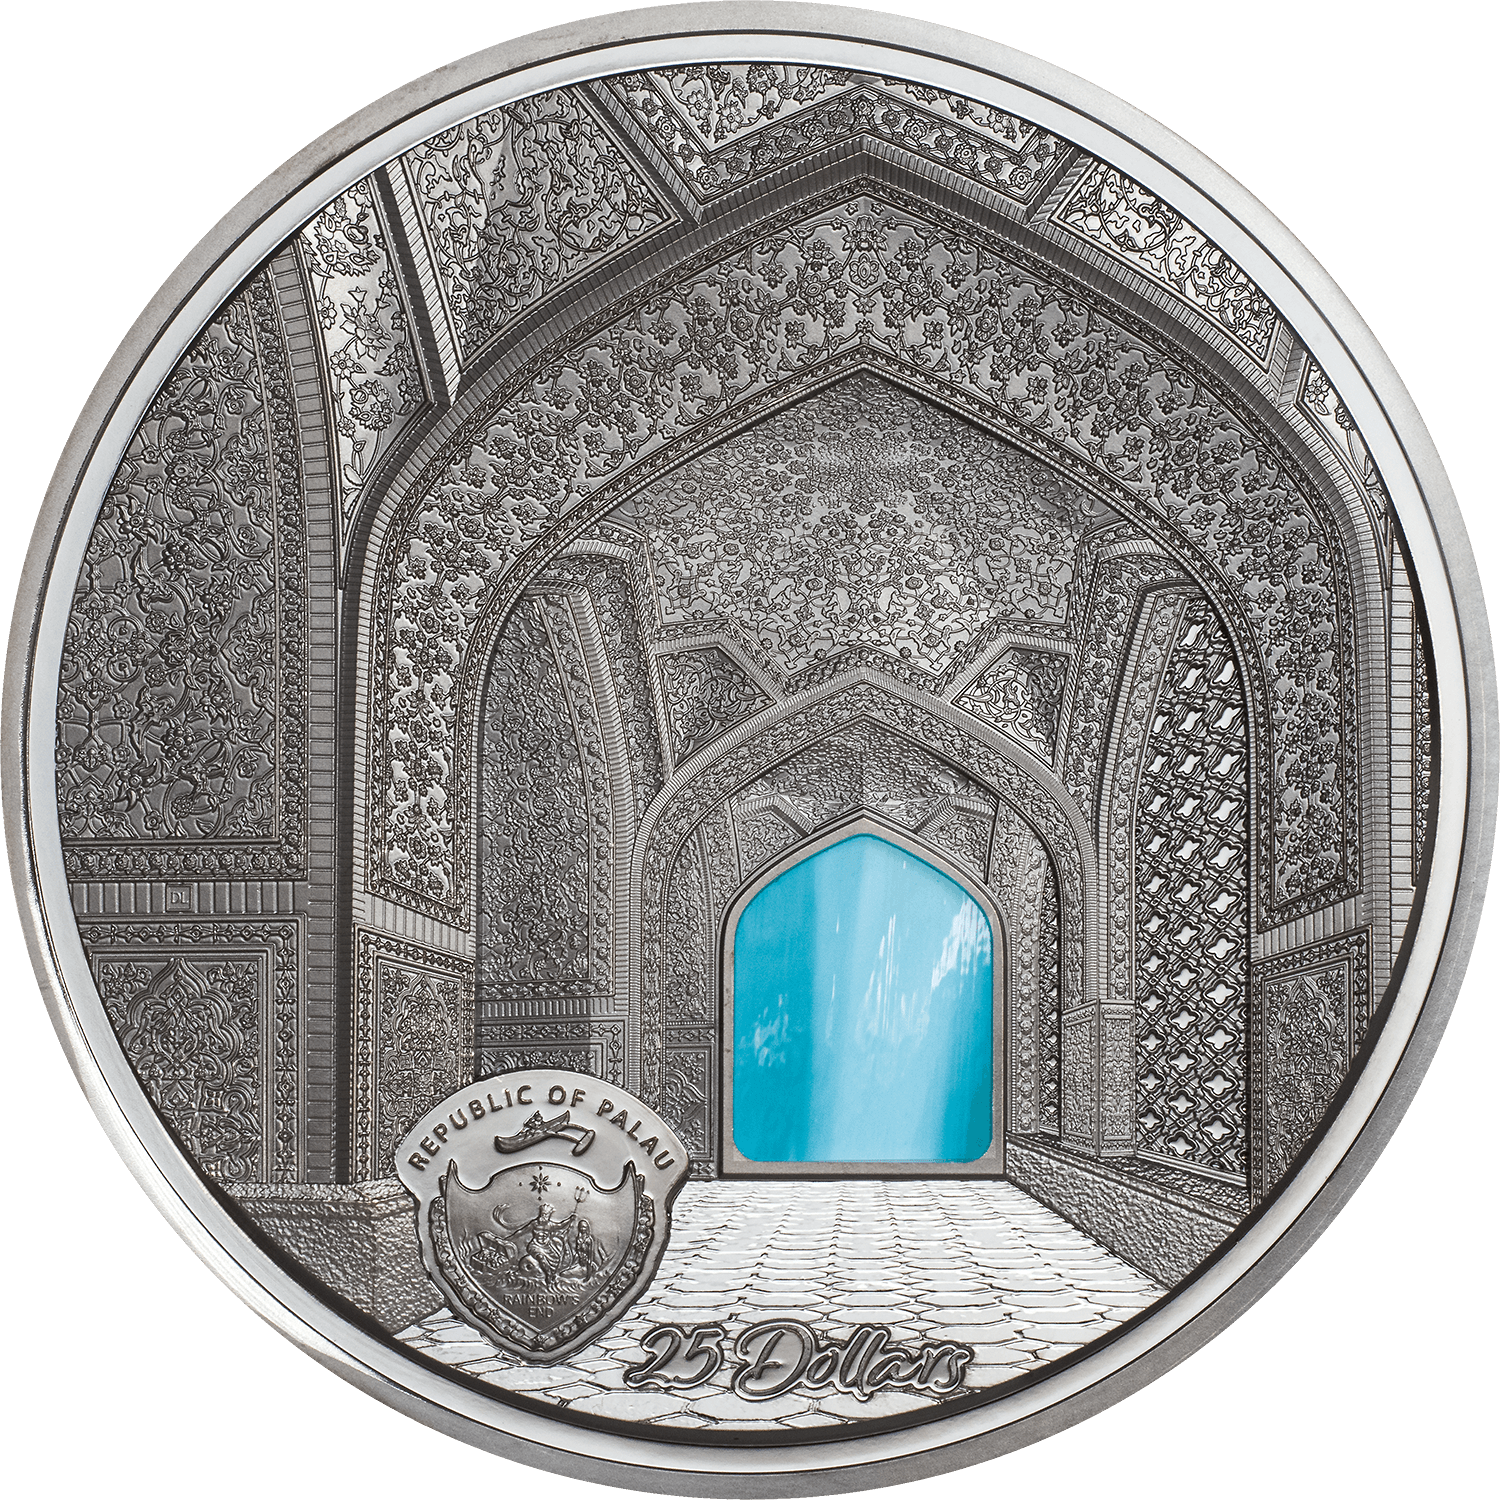 TIFFANY ART Isfahan 5 Oz Silver Coin $25 Palau 2020 - PARTHAVA COIN